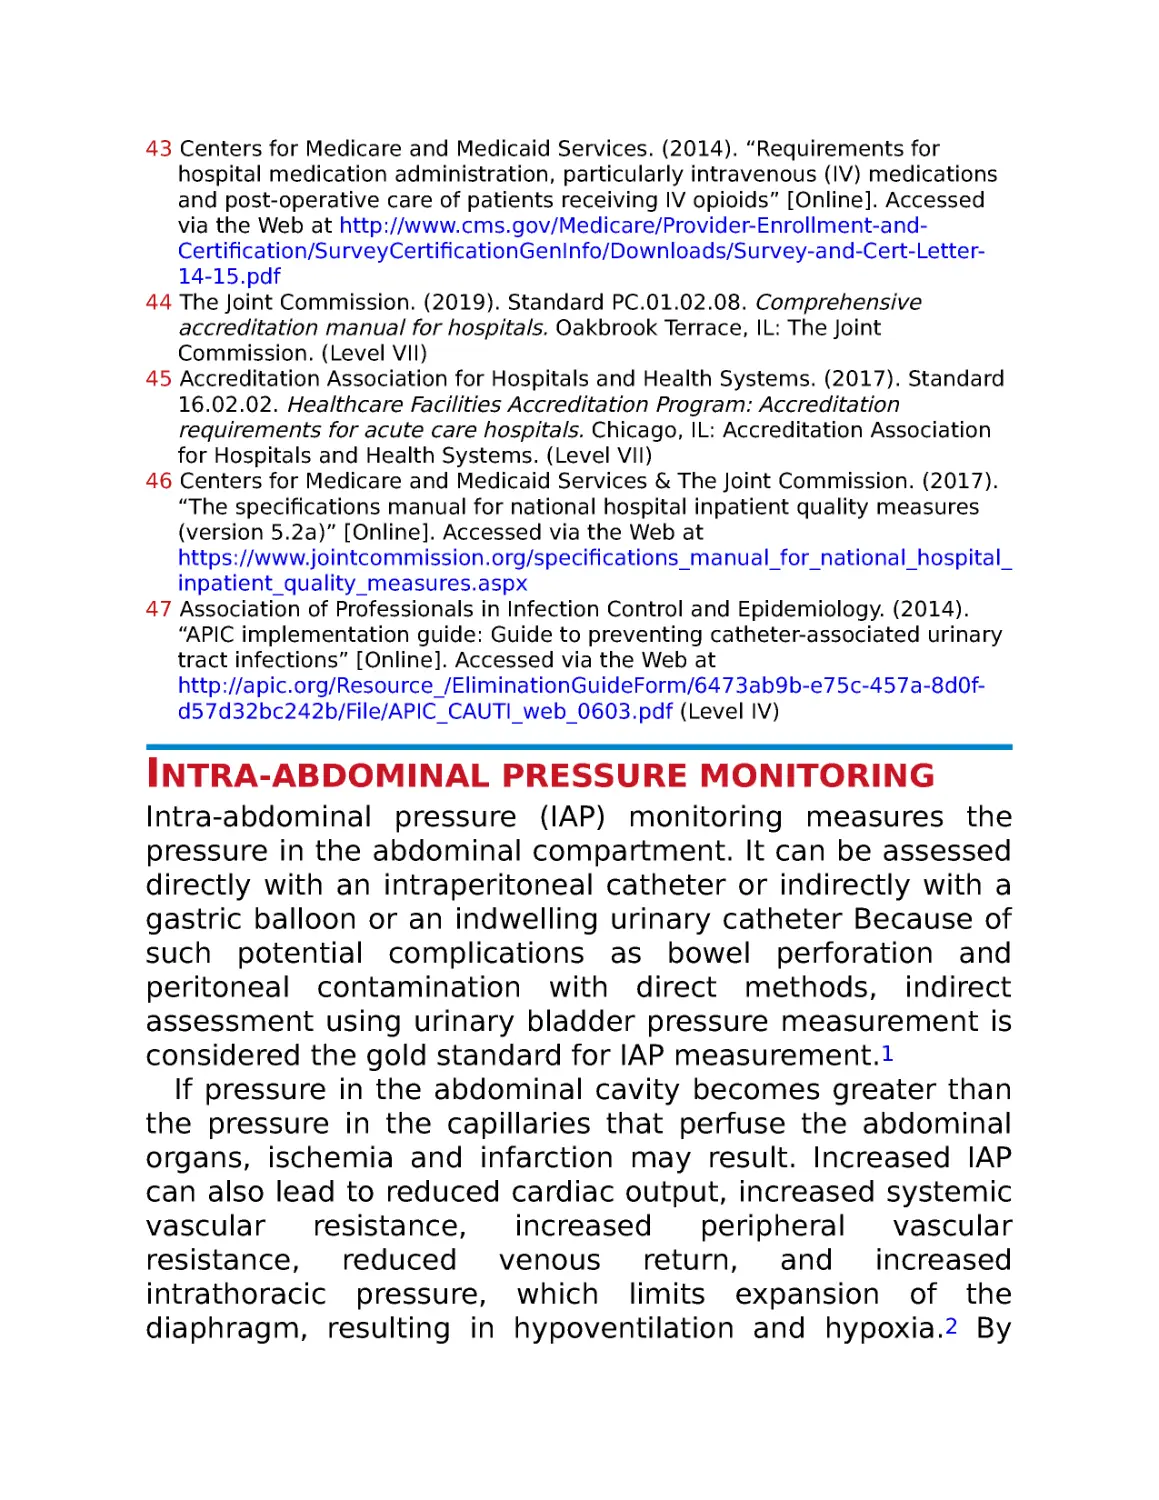 Intra-abdominal pressure monitoring